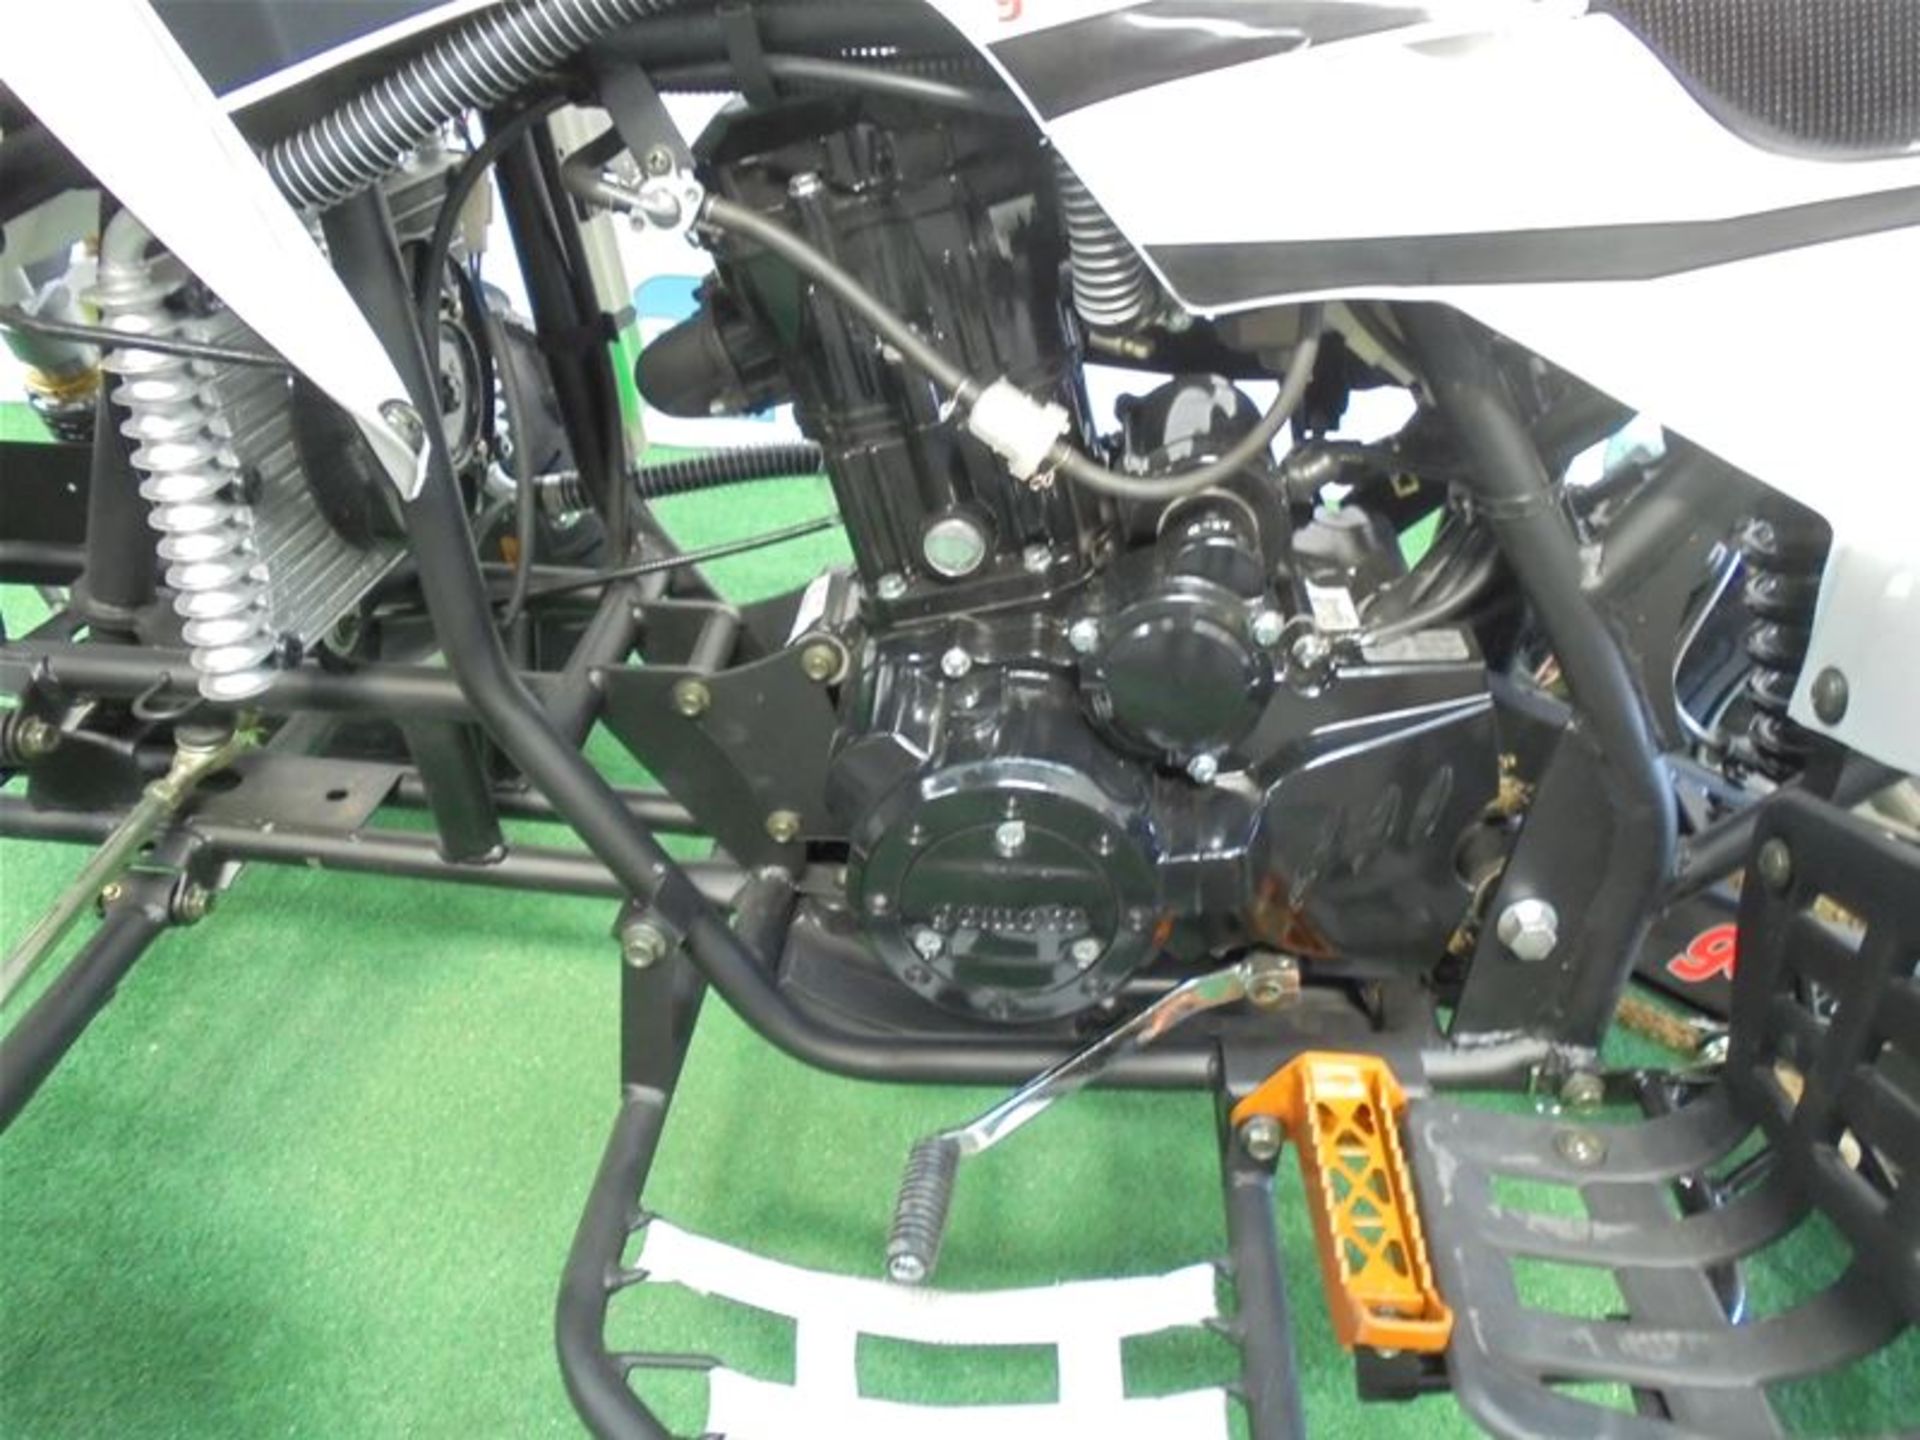 Gomoto 250cc ATV - Image 5 of 8